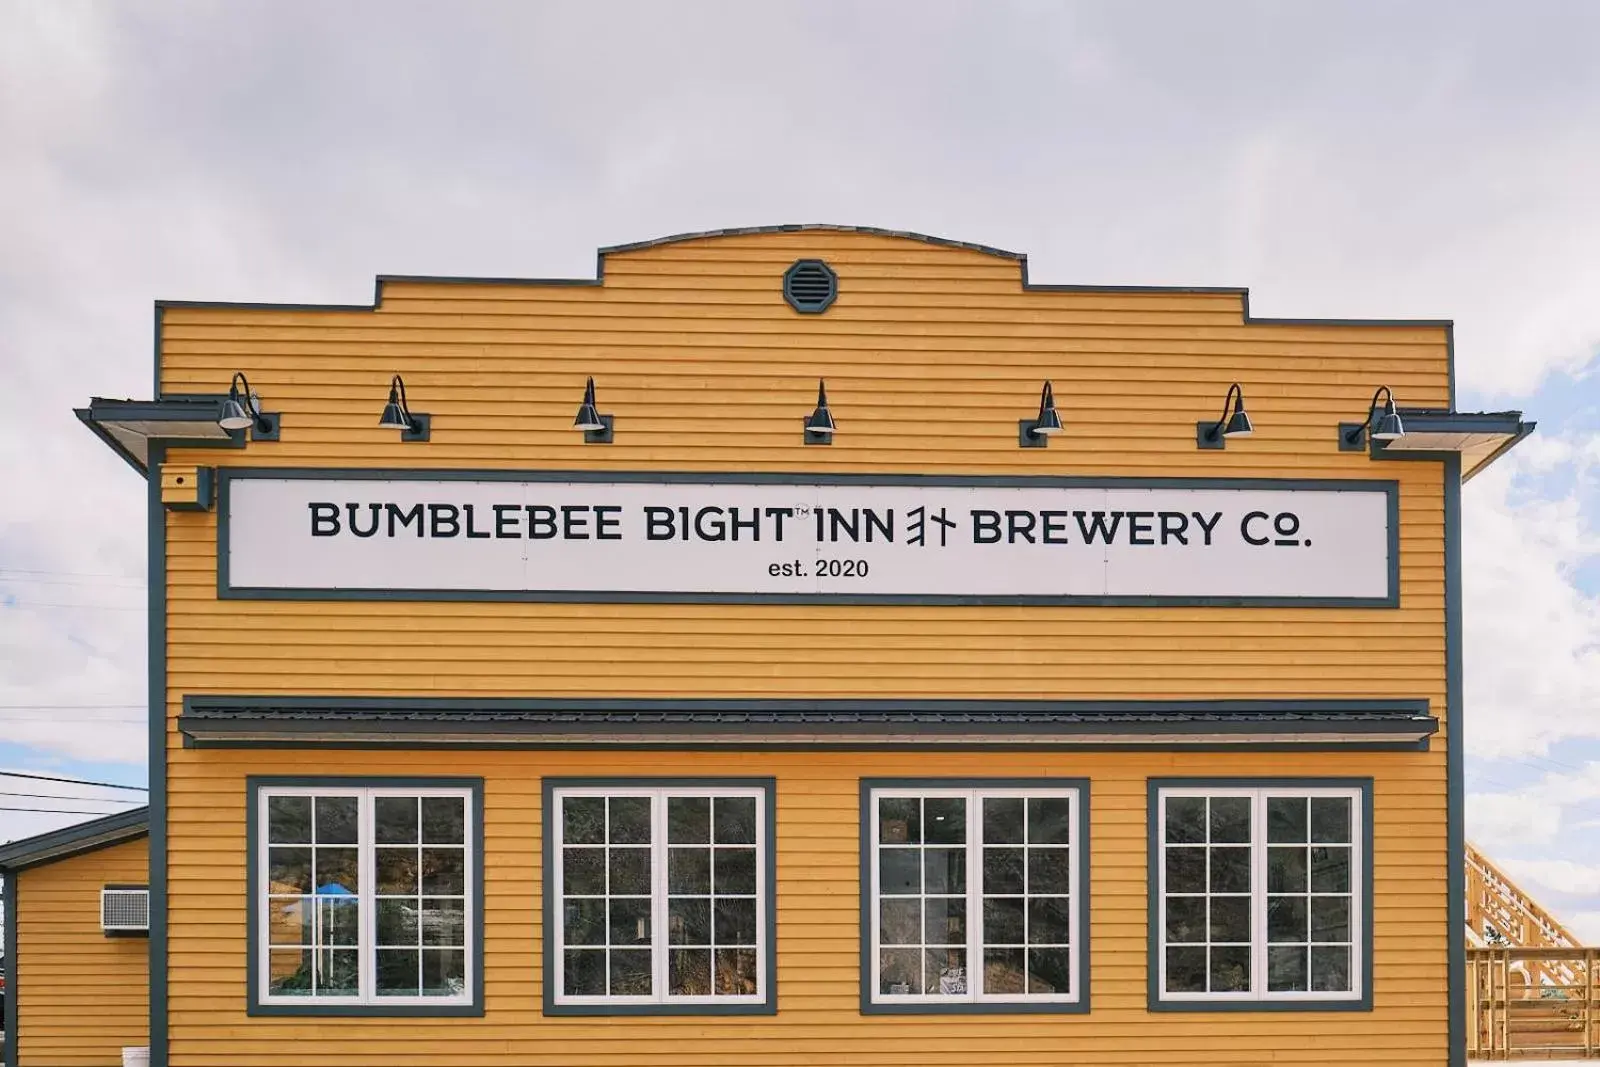 Bumblebee Bight Inn